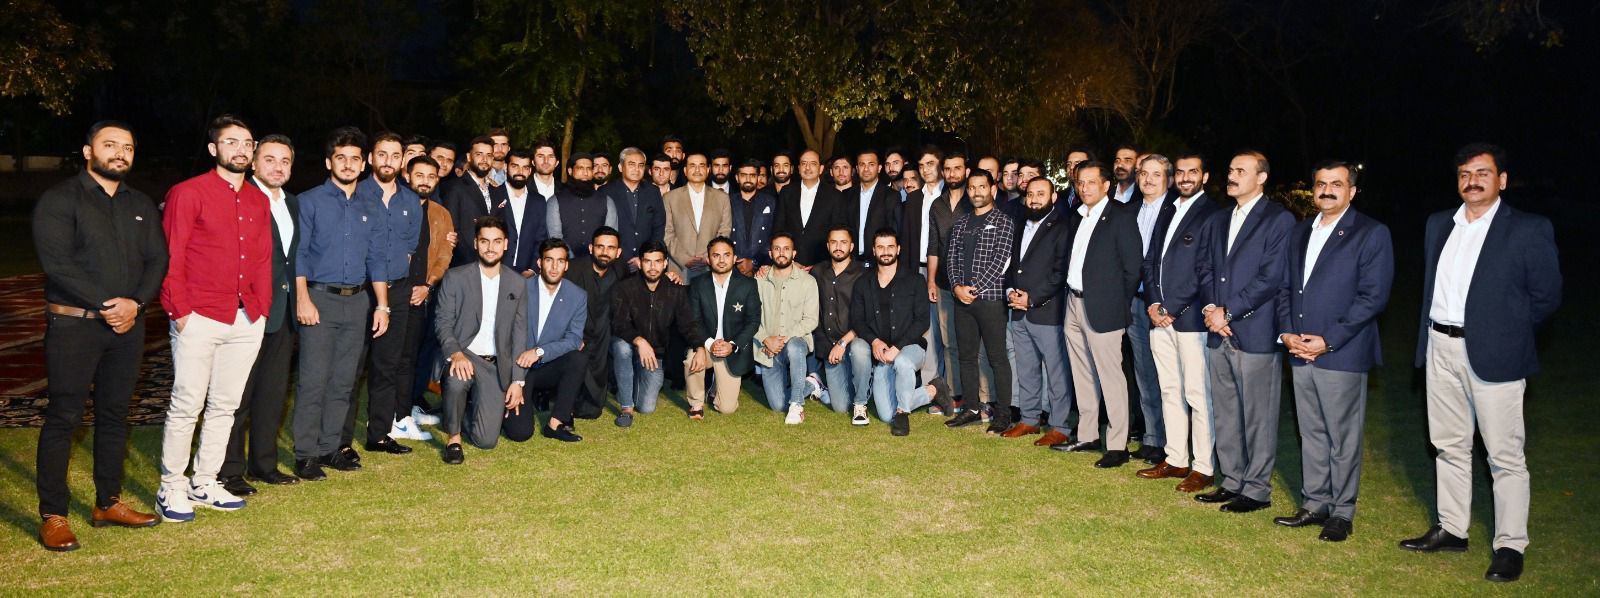 COAS hosts iftar dinner for Pakistan cricket team